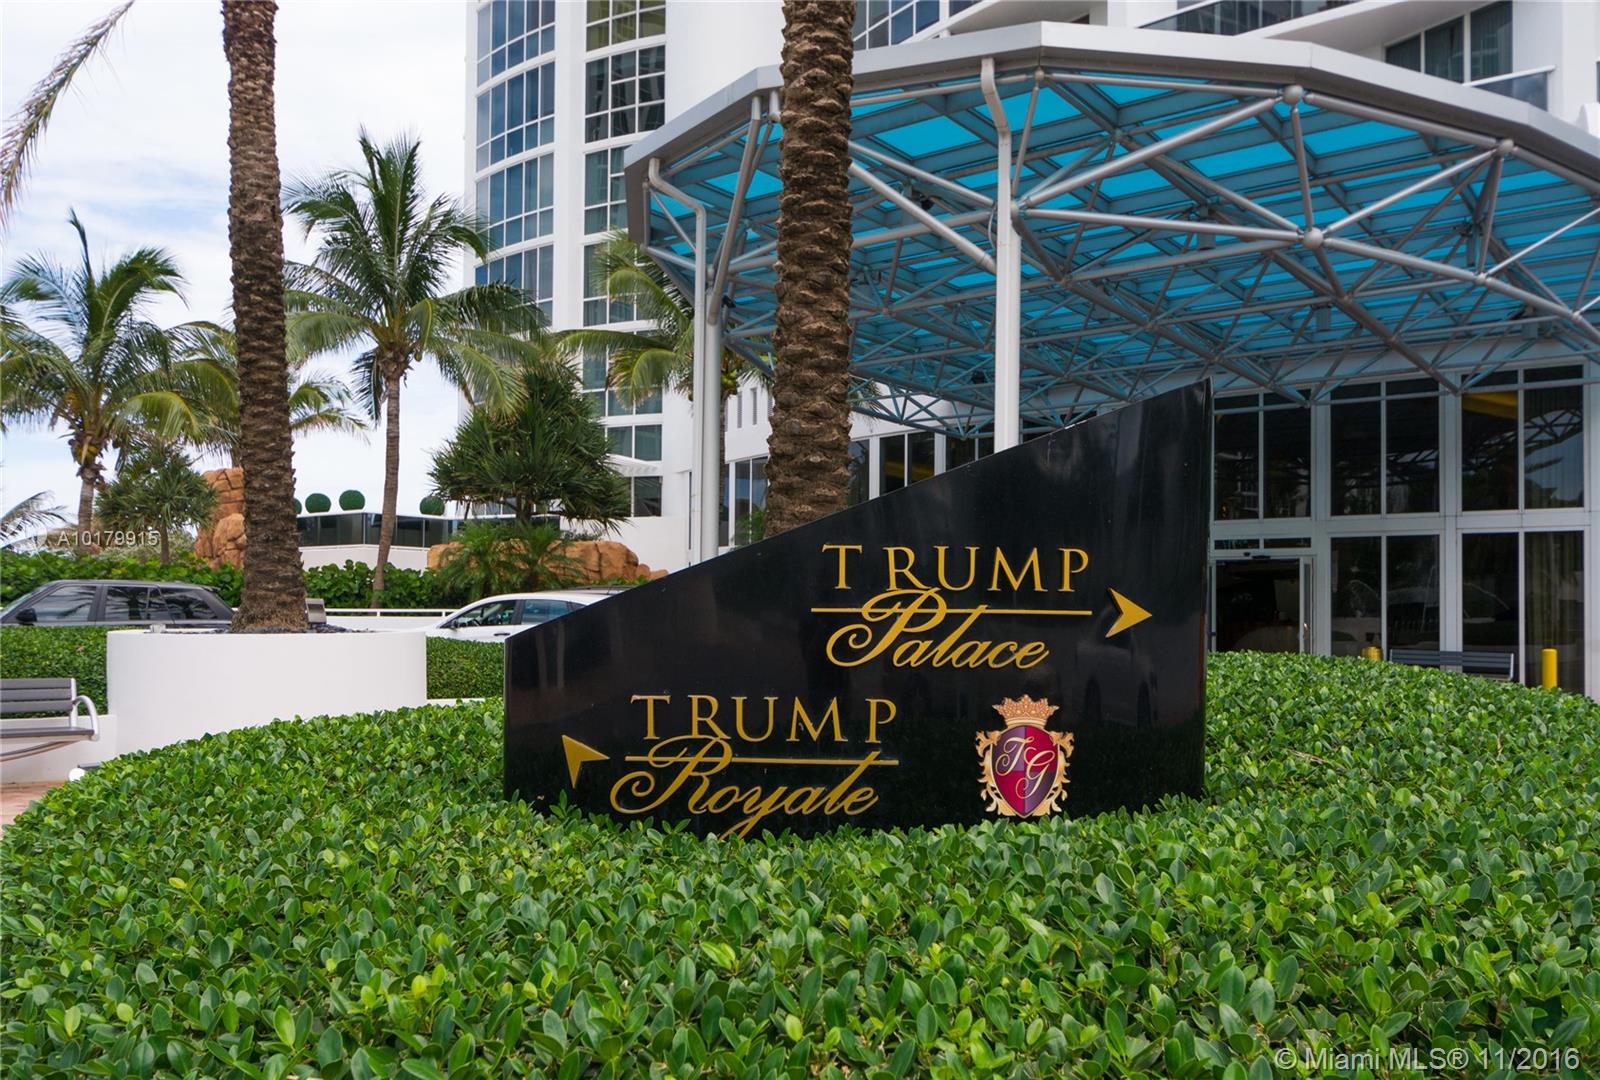 Trump Palace image #2